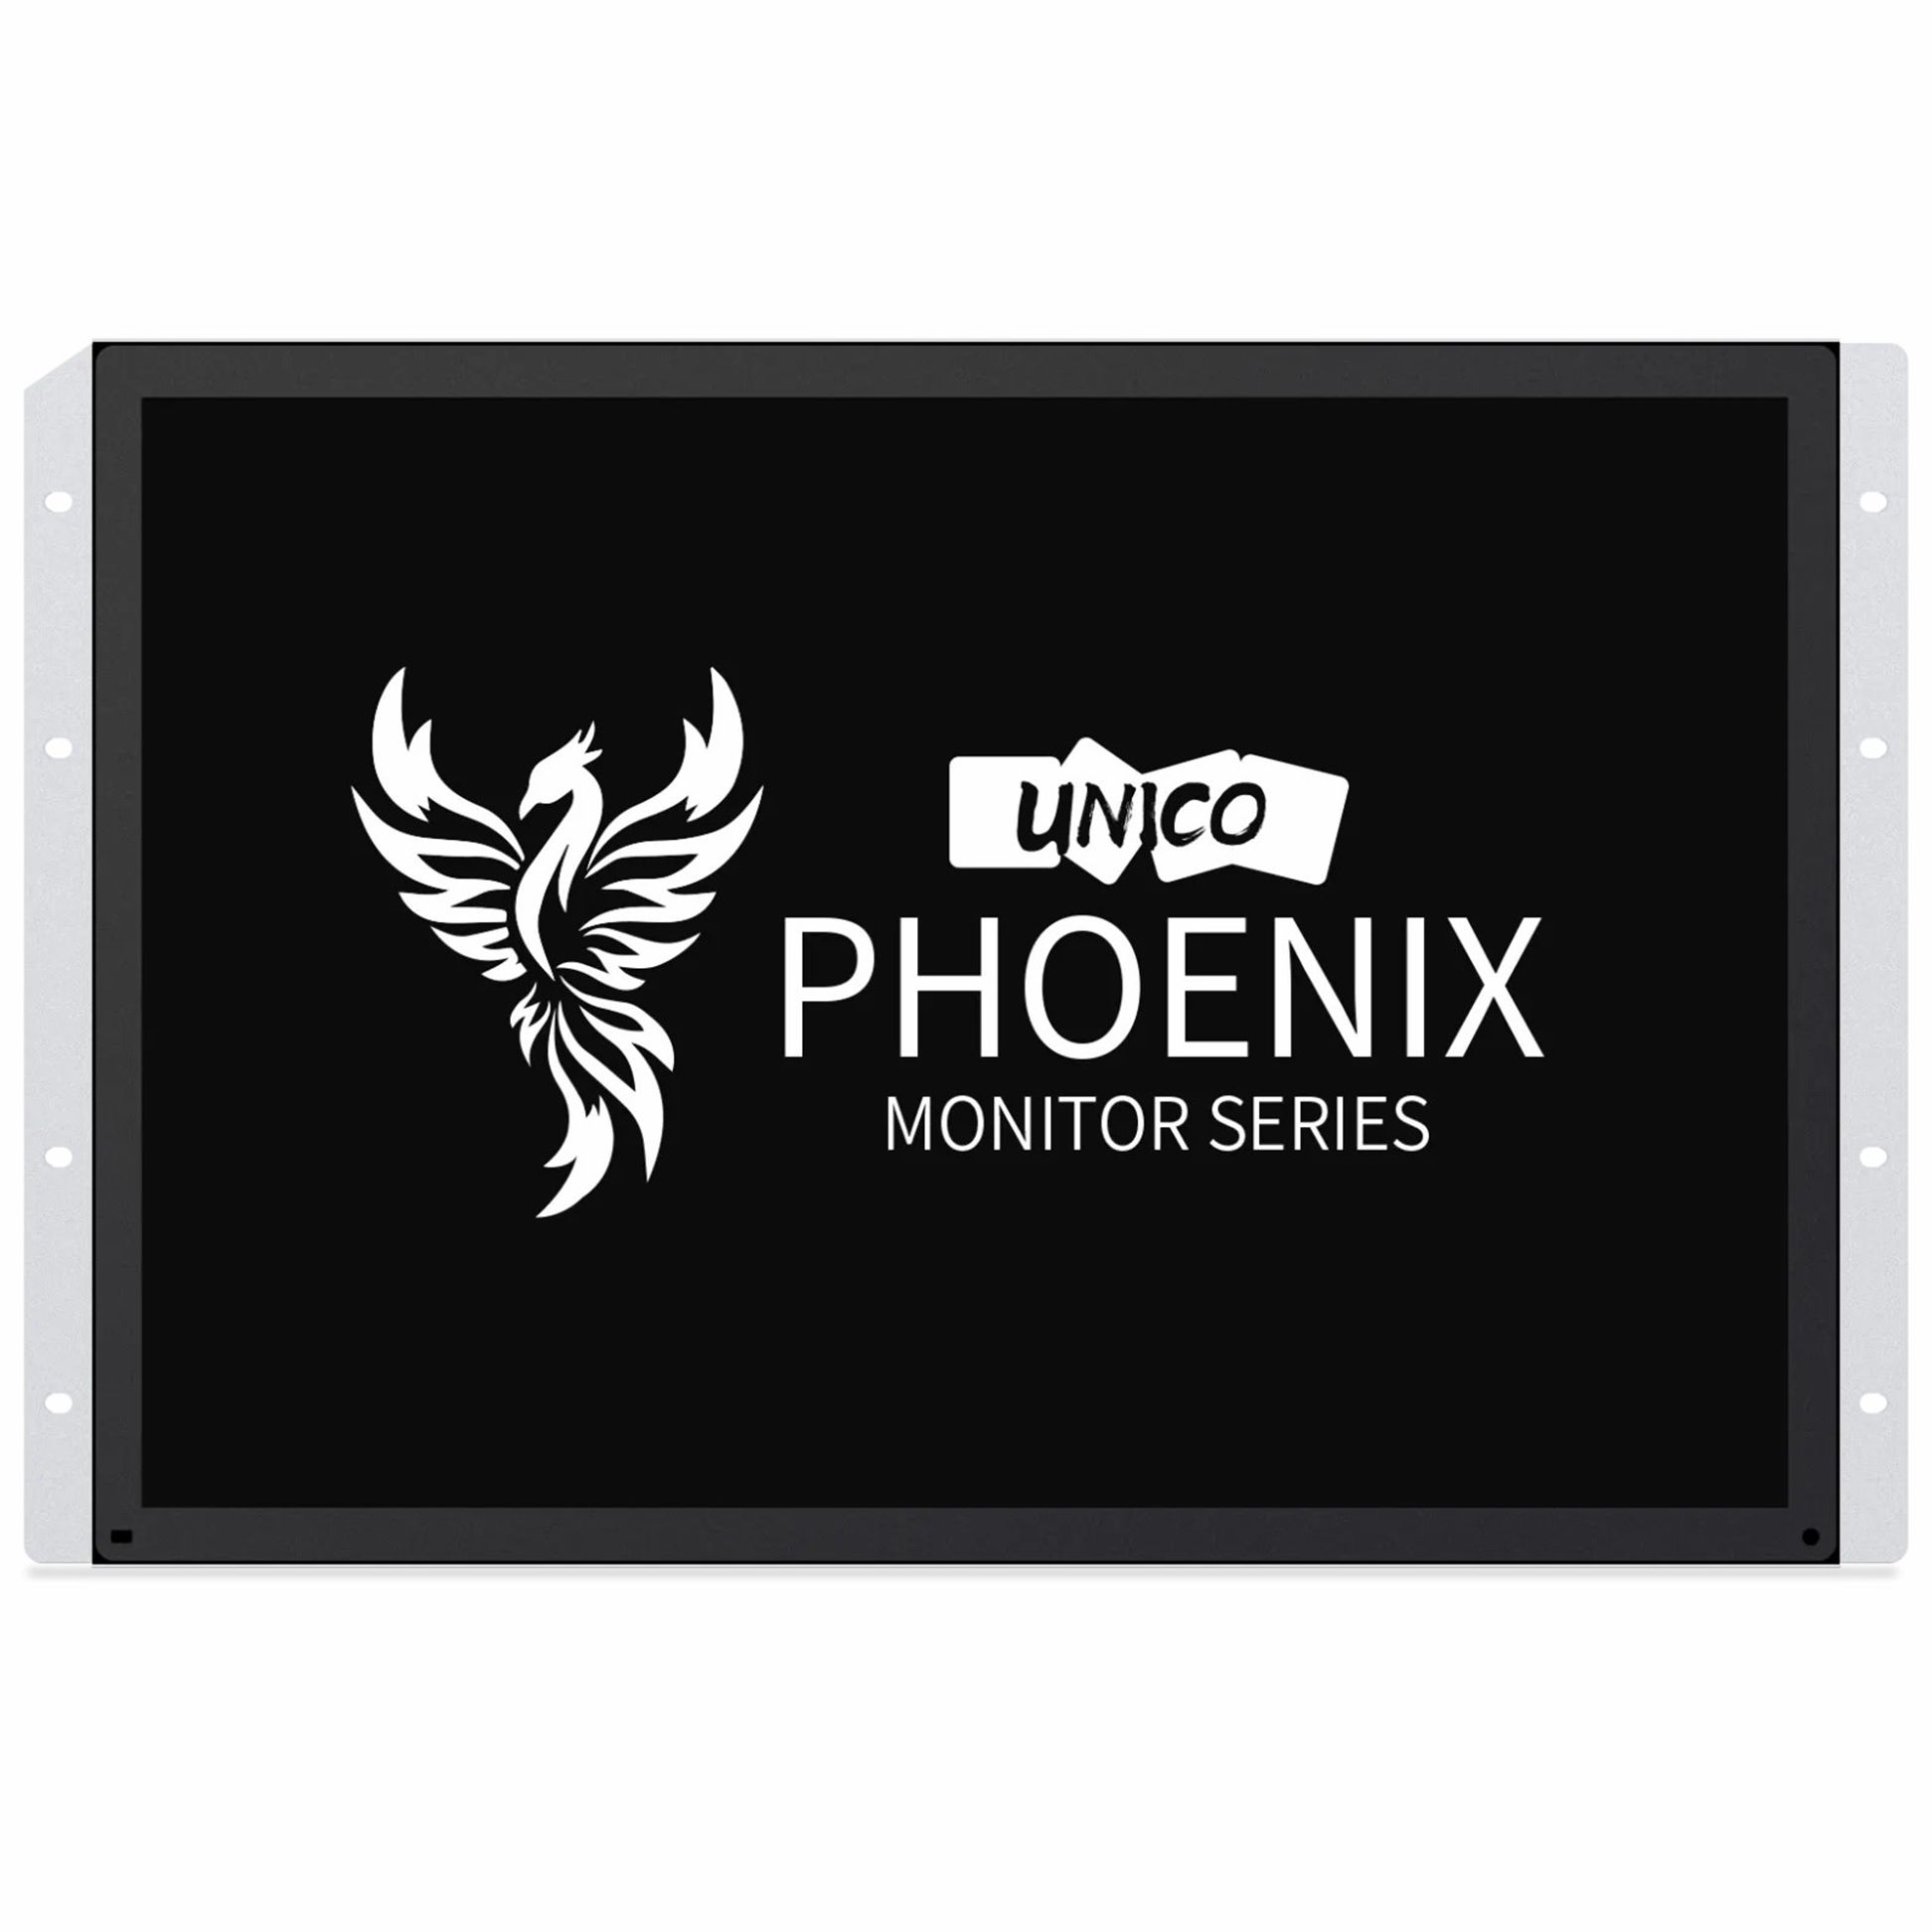 ULM19 Unico Phoenix Series Of Arcade CRT Replacement LCD Monitors